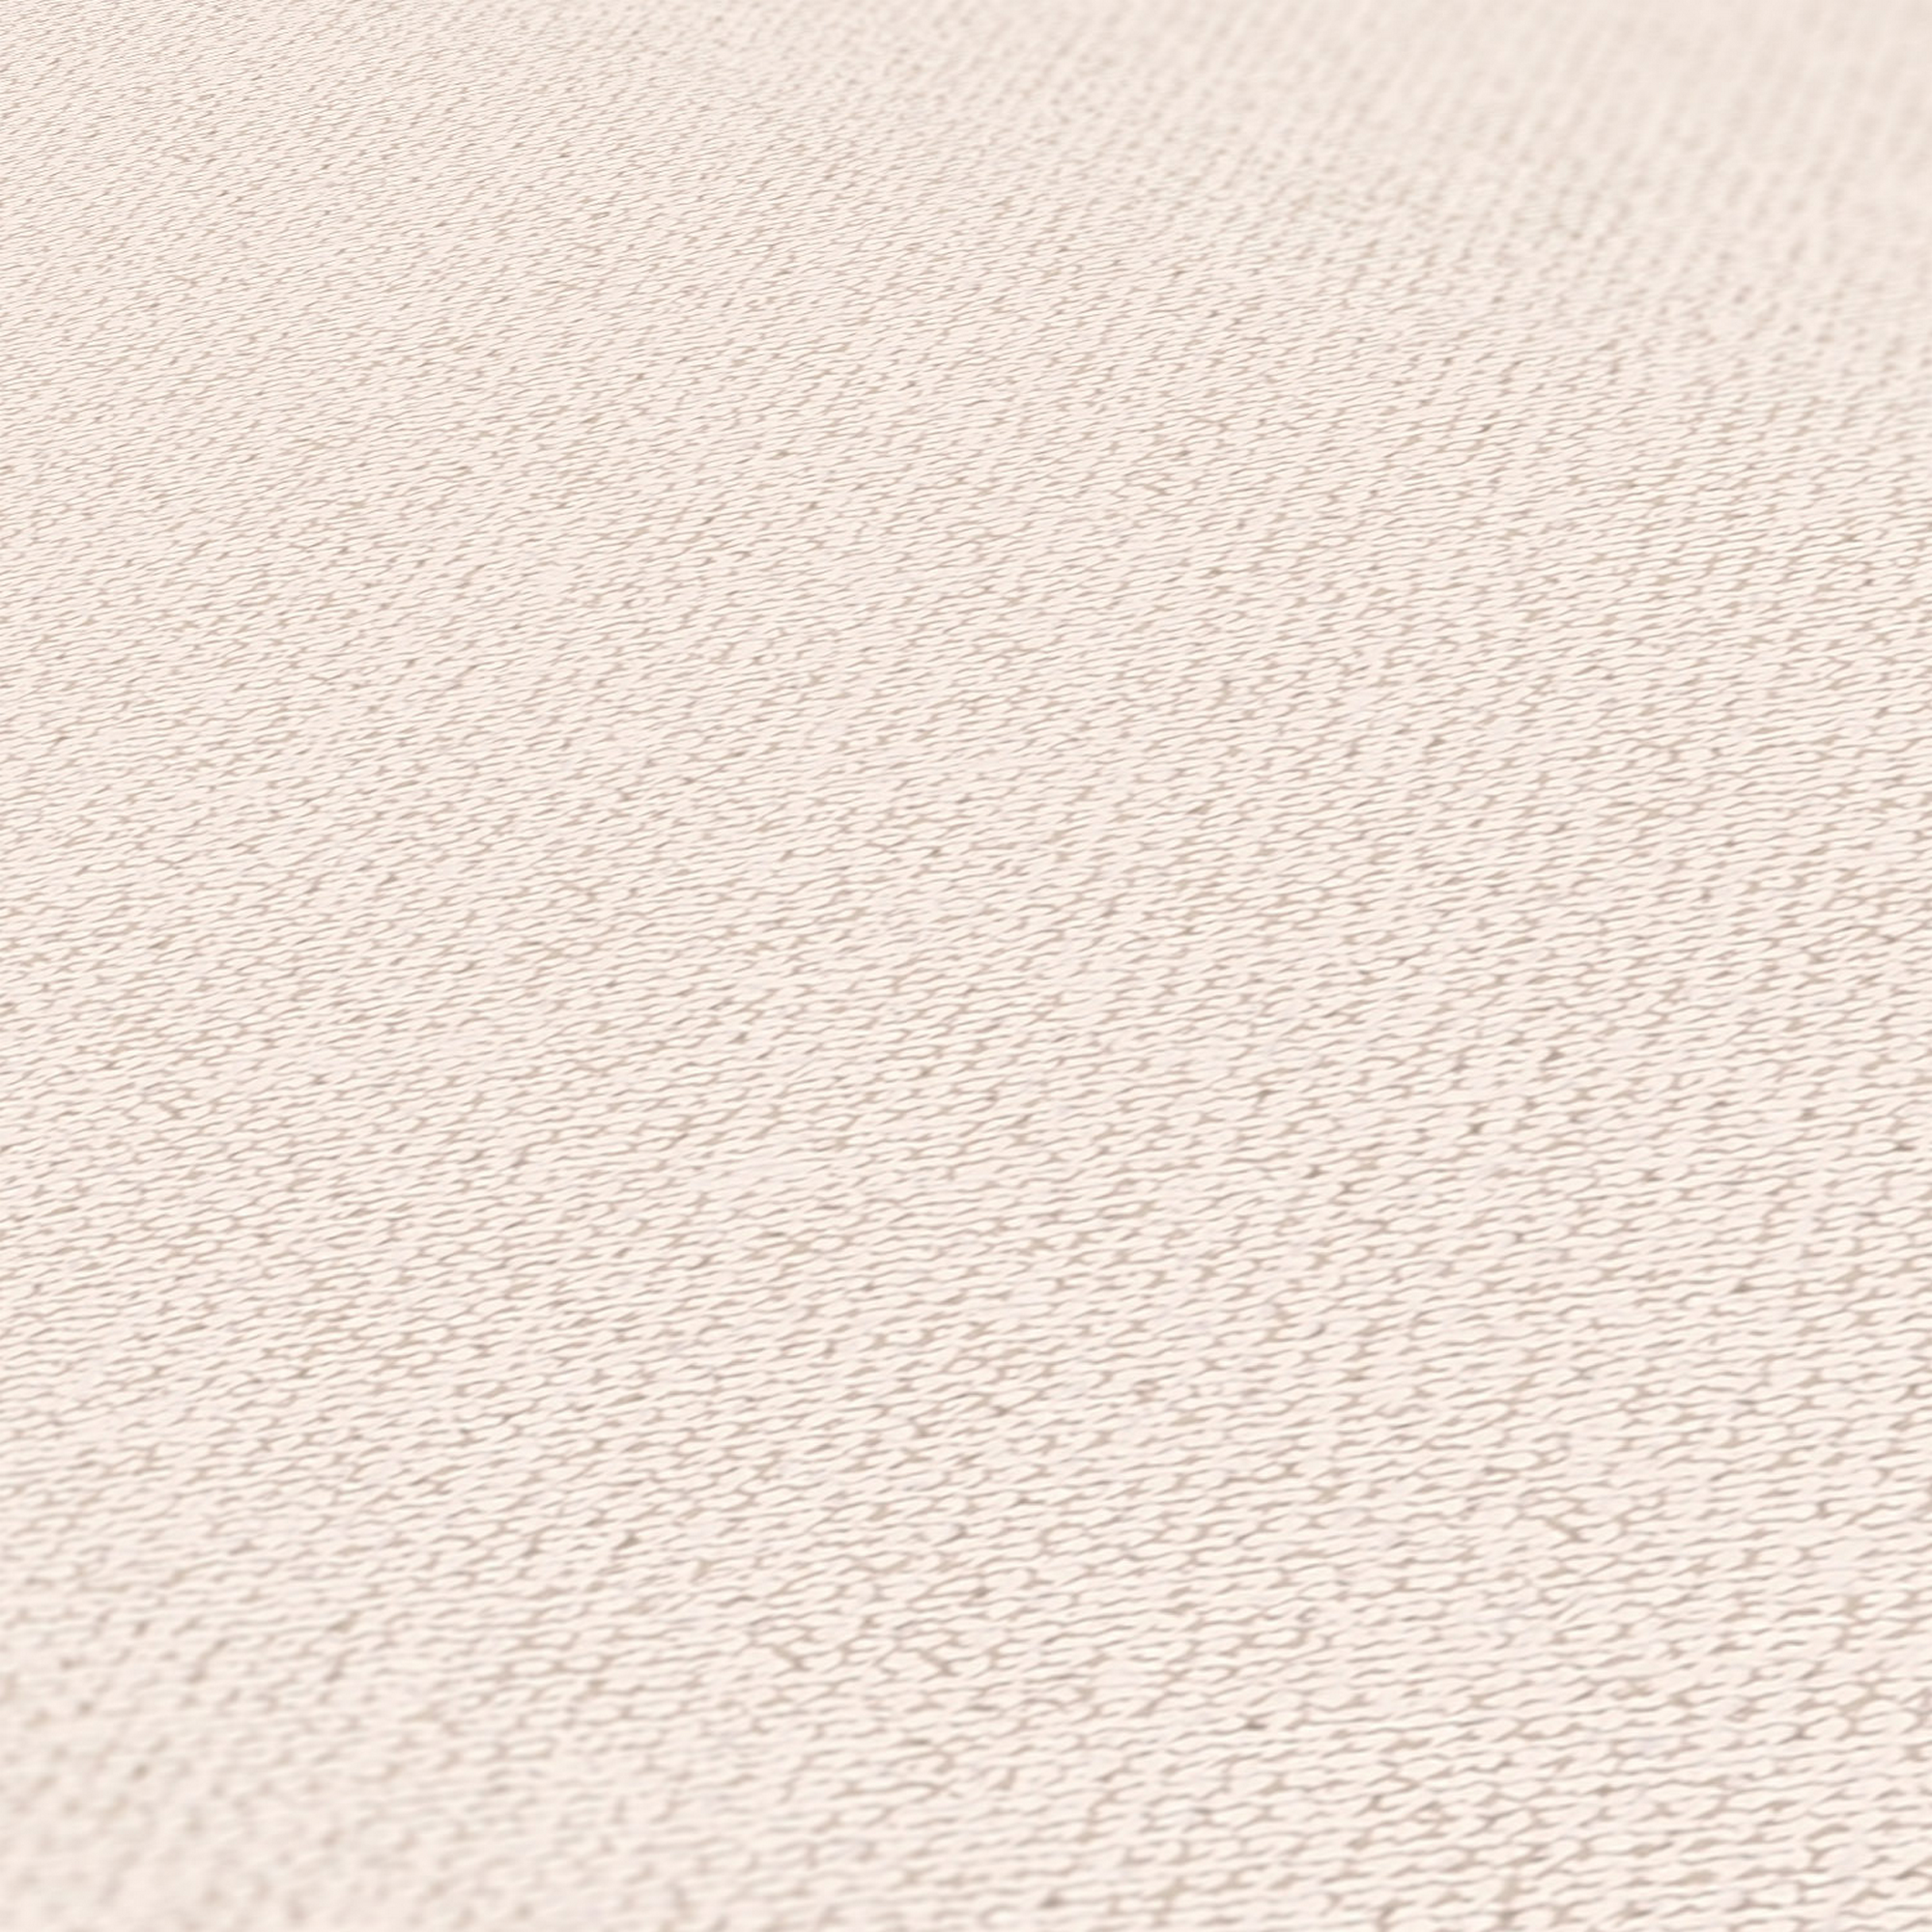 Vliestapete 'Attractive' Unistruktur creme/beige 10,05 m x 0,53 m + product picture